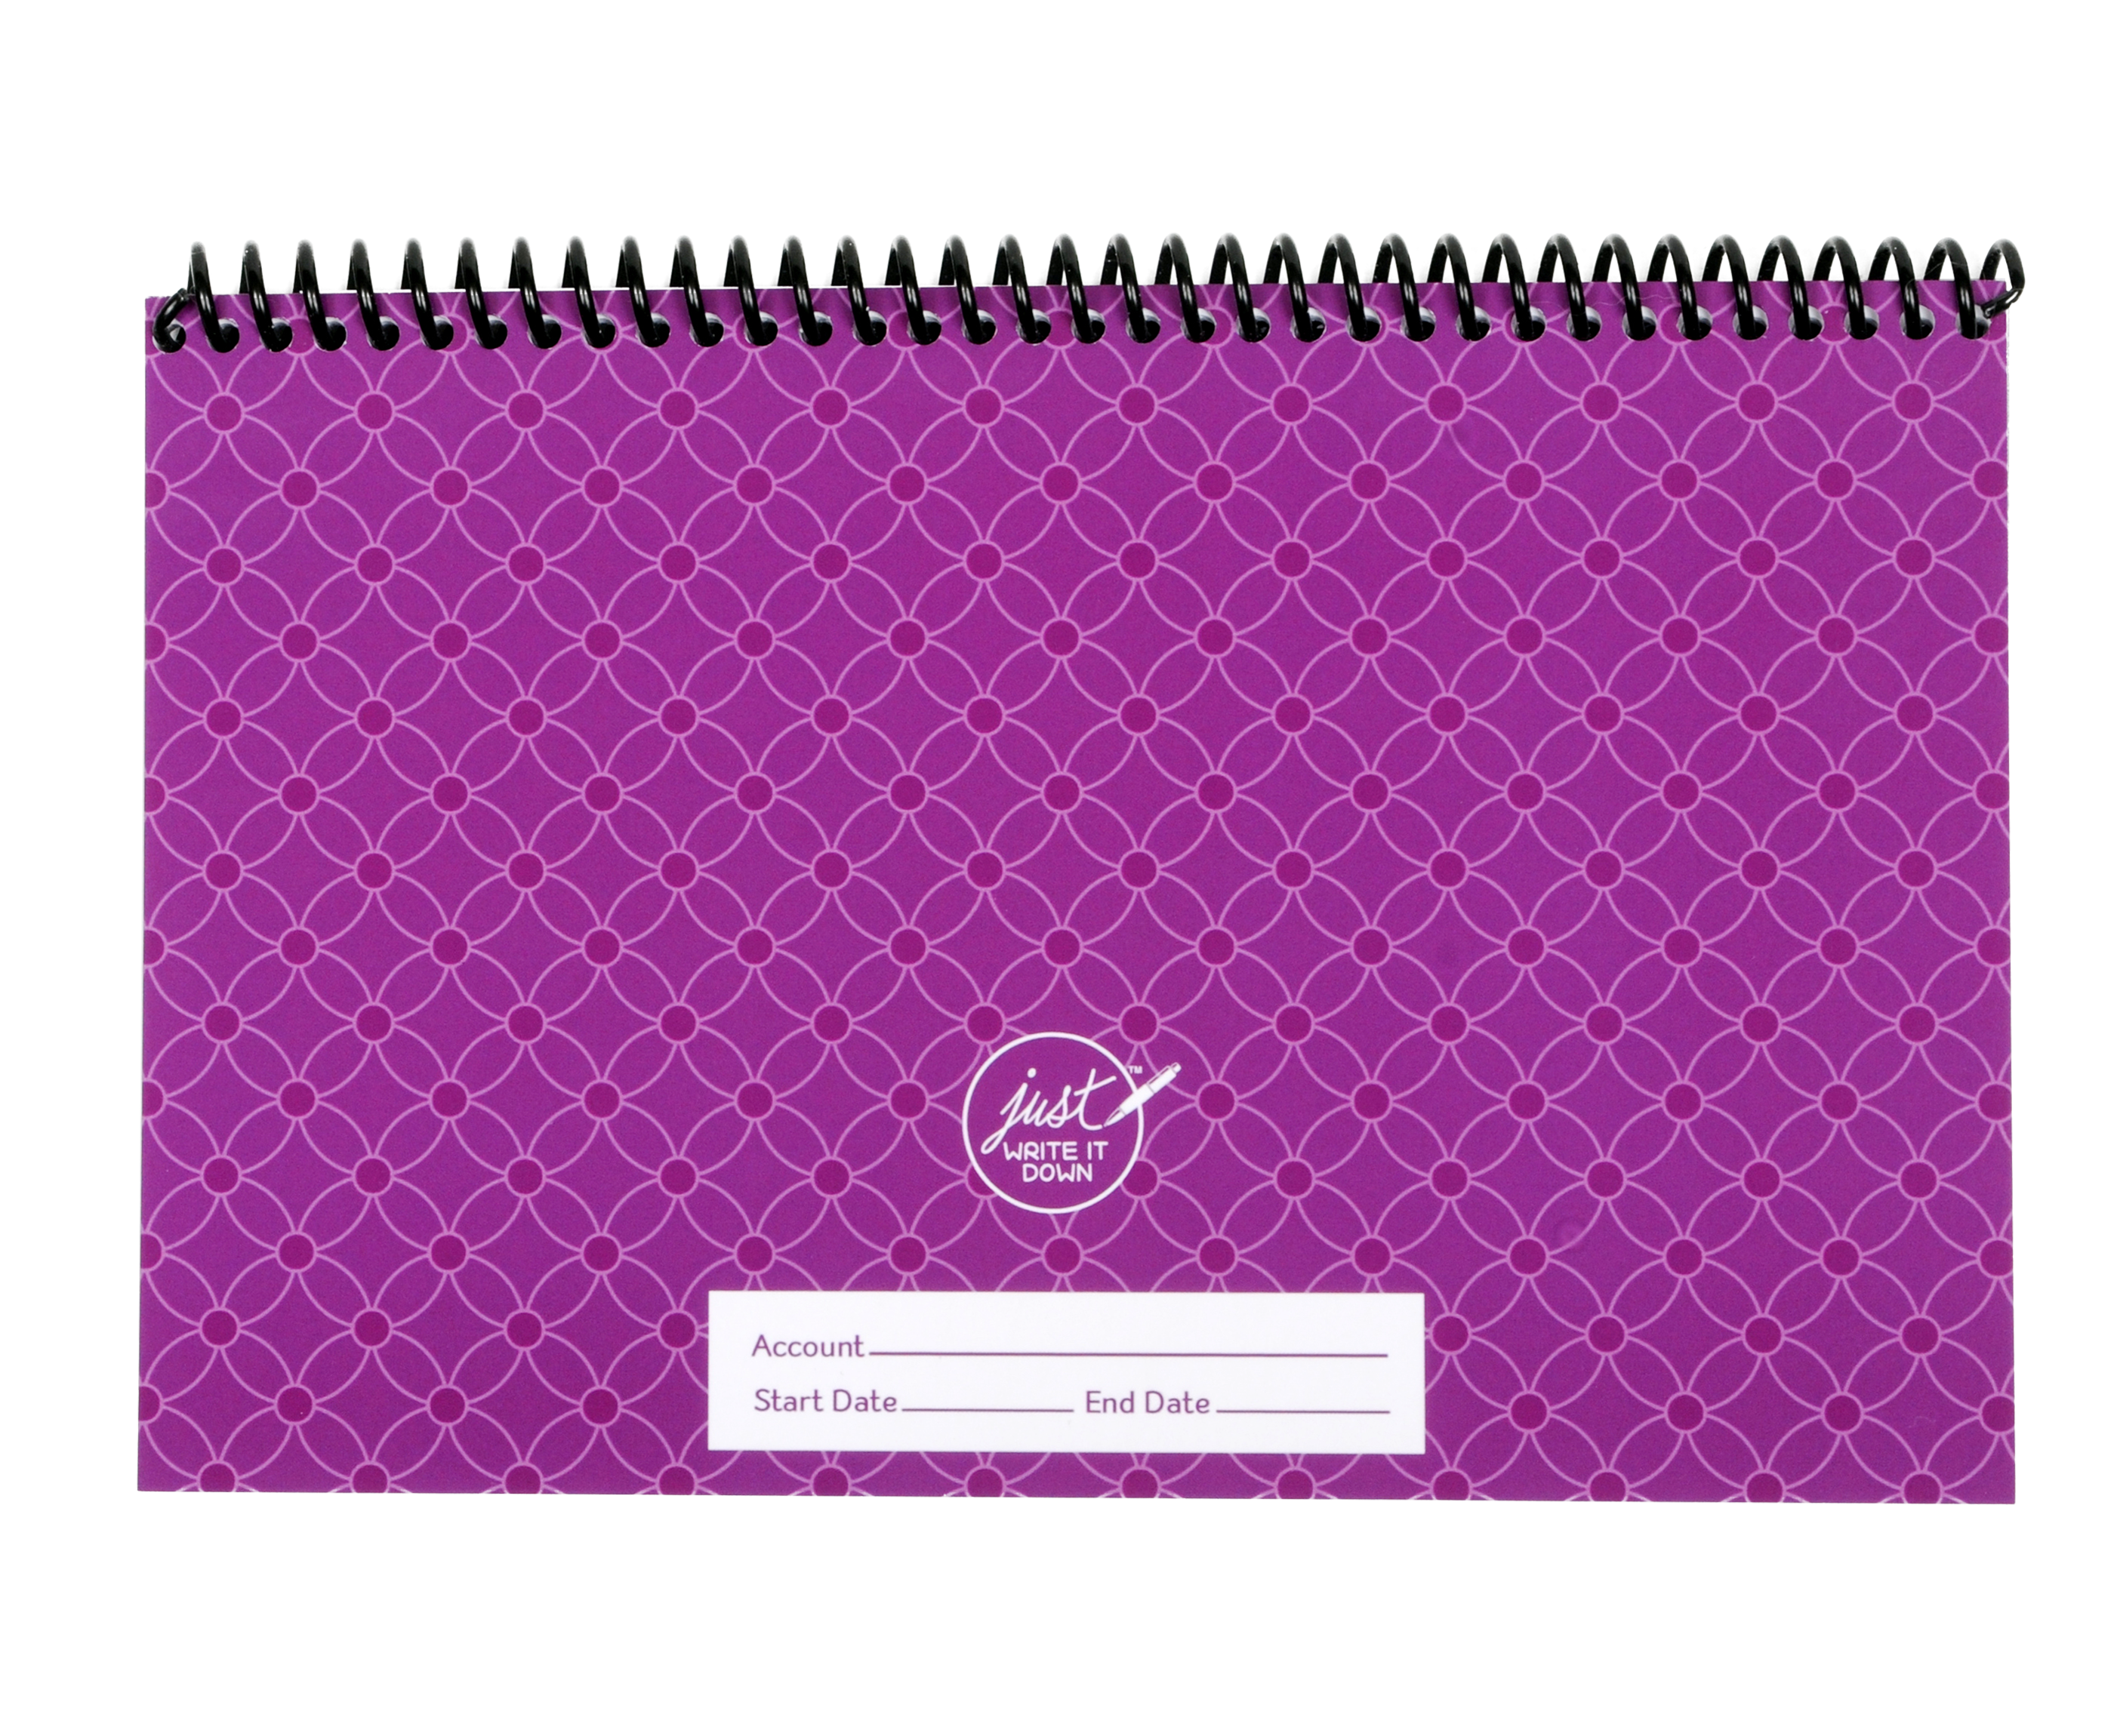 The Superior Check and Debit Card Register - Purple, Wide